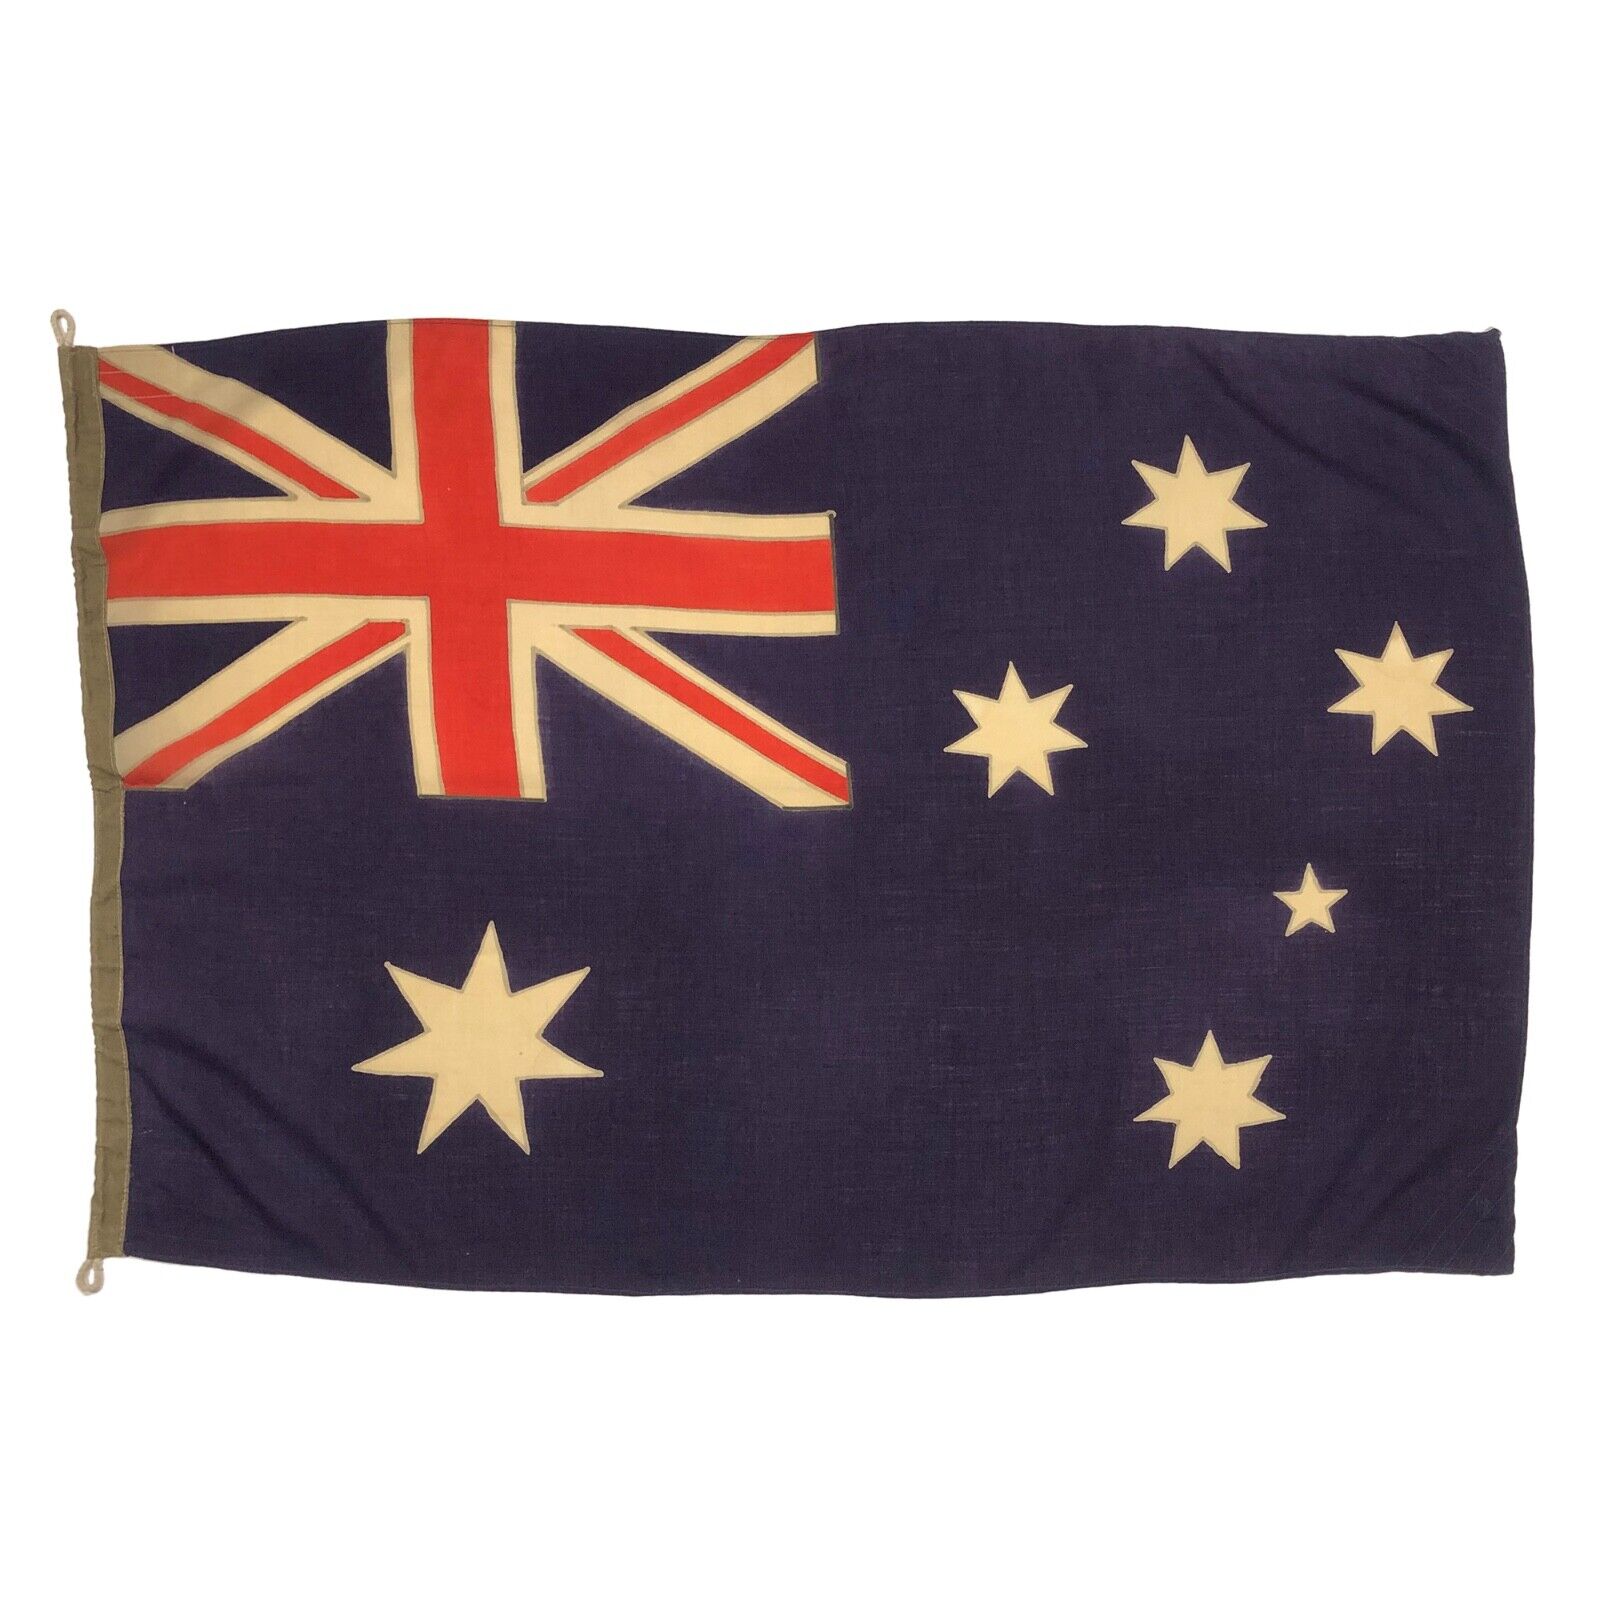 Vintage Wool Hand-Painted Flag Australia Banner Distressed Old Cloth Union Jack